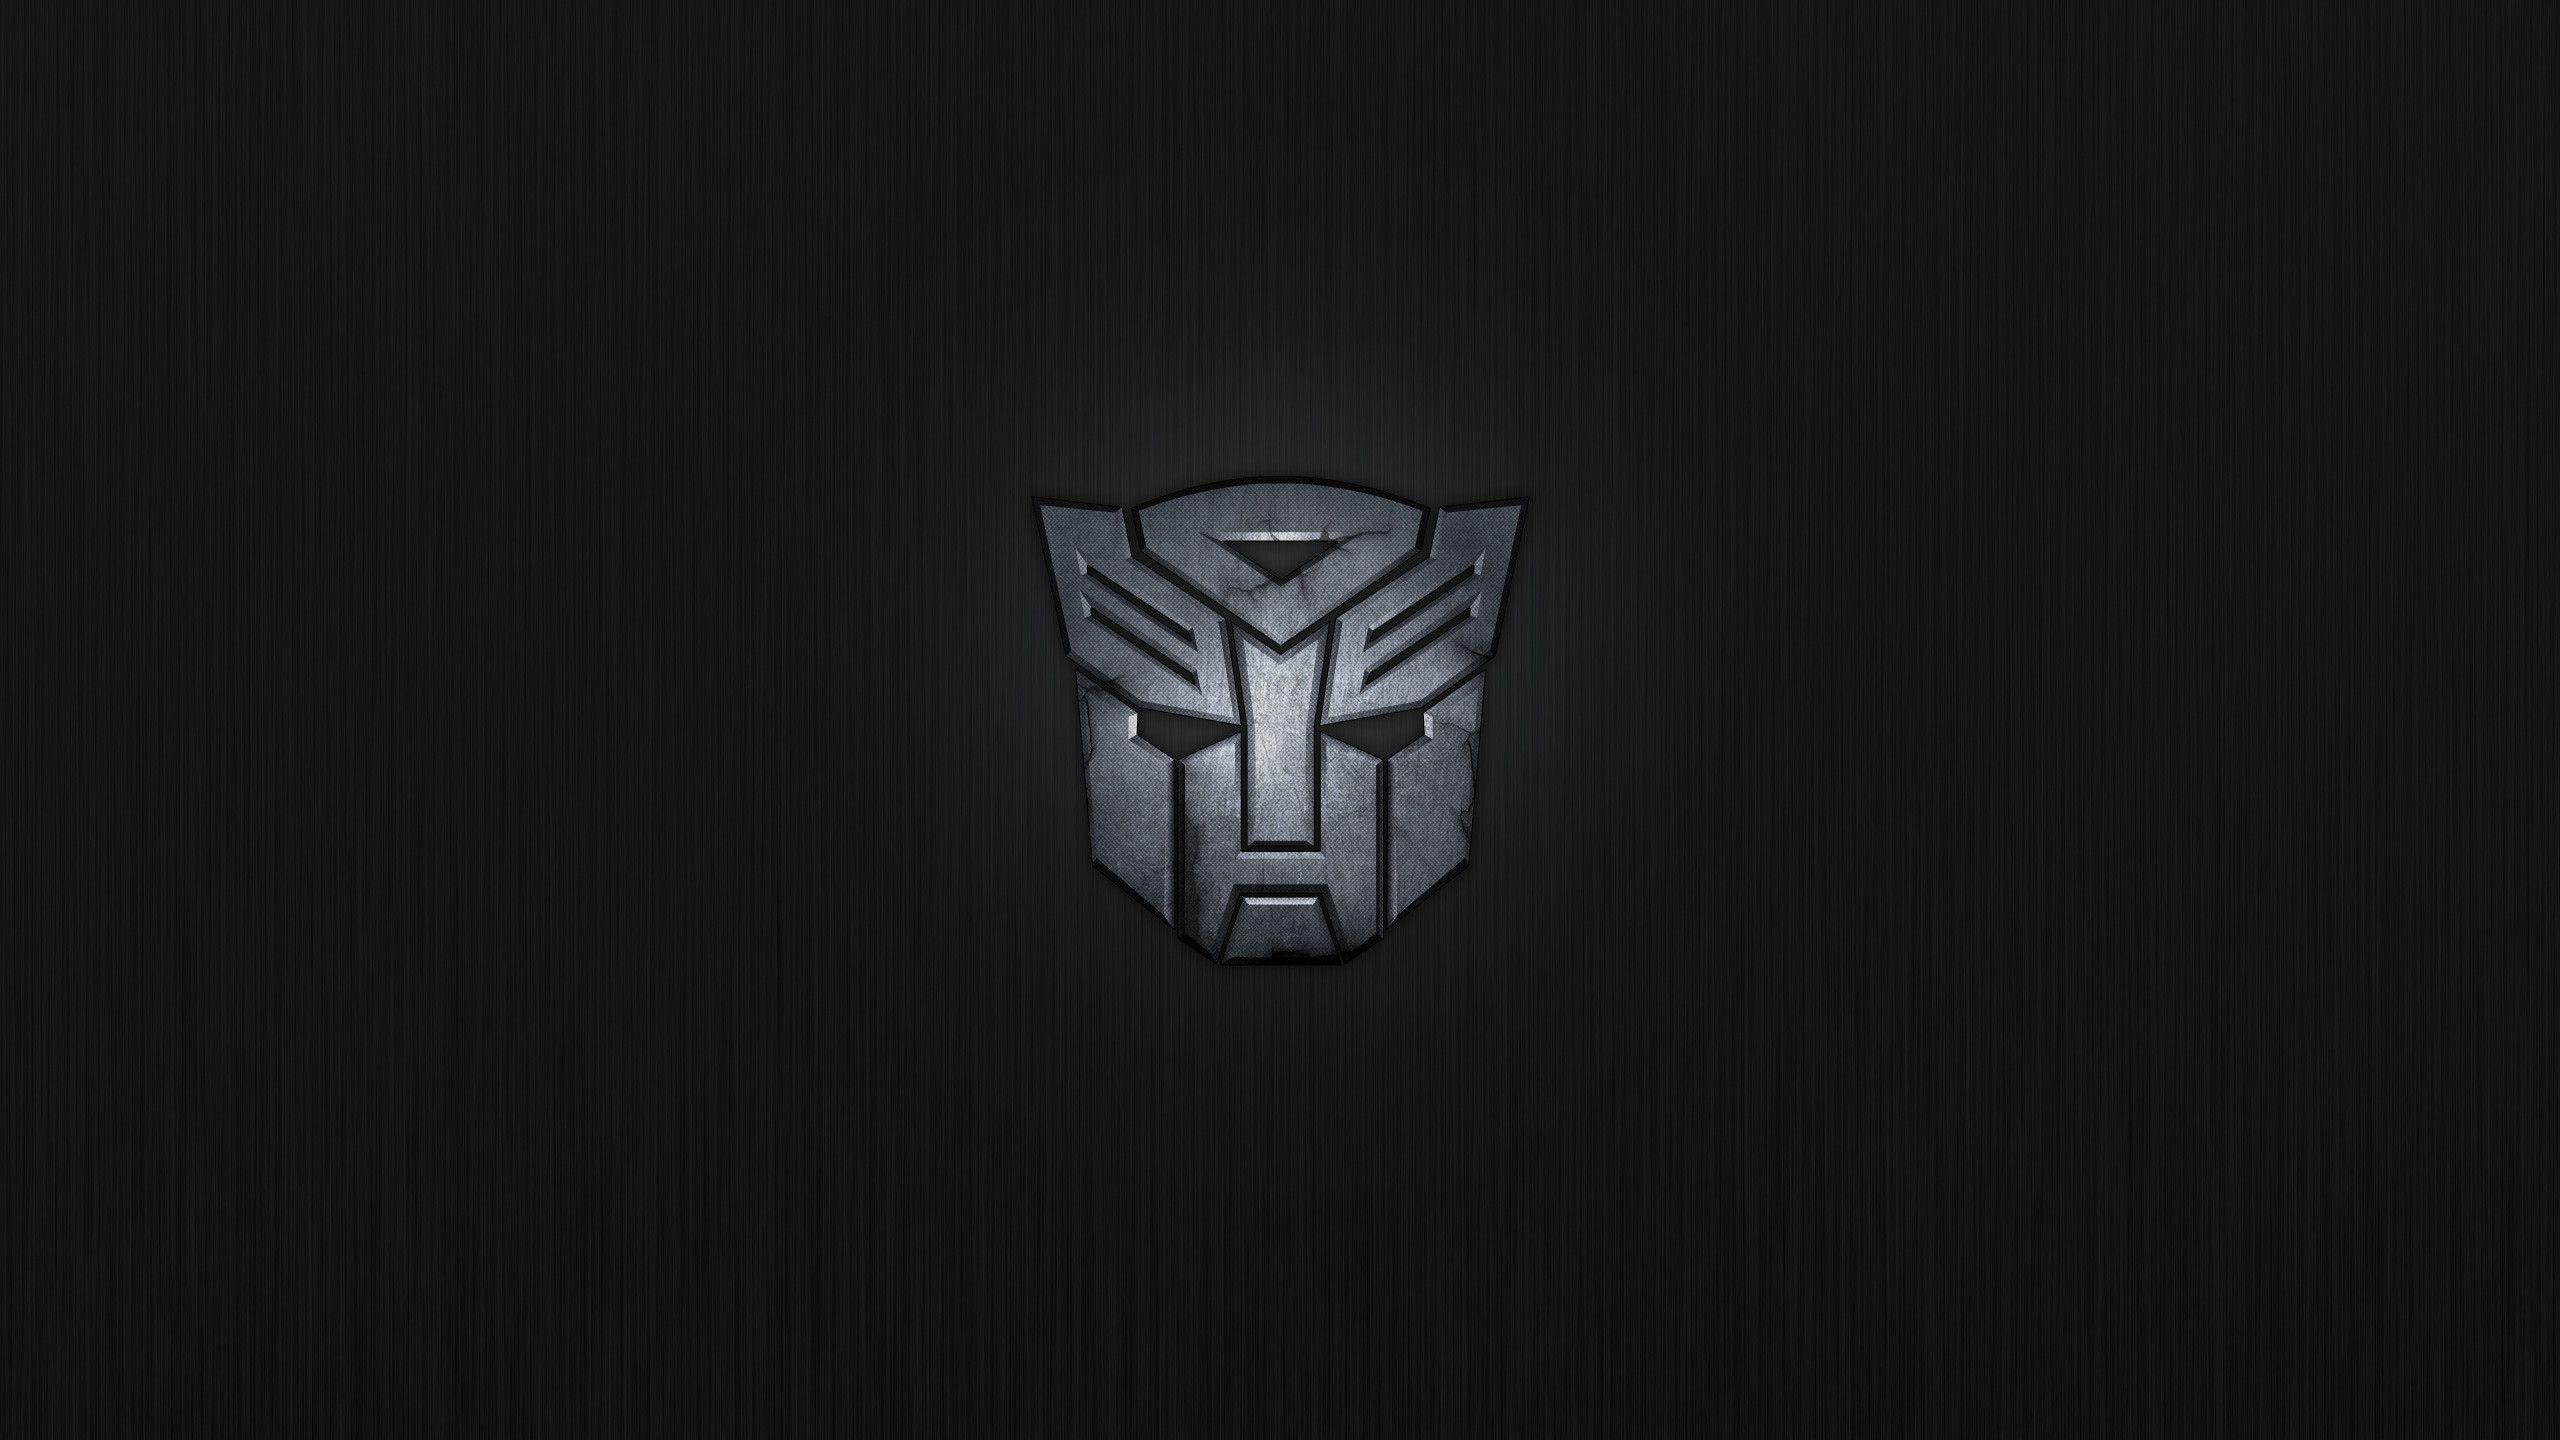 transformer autobot logo wallpaper